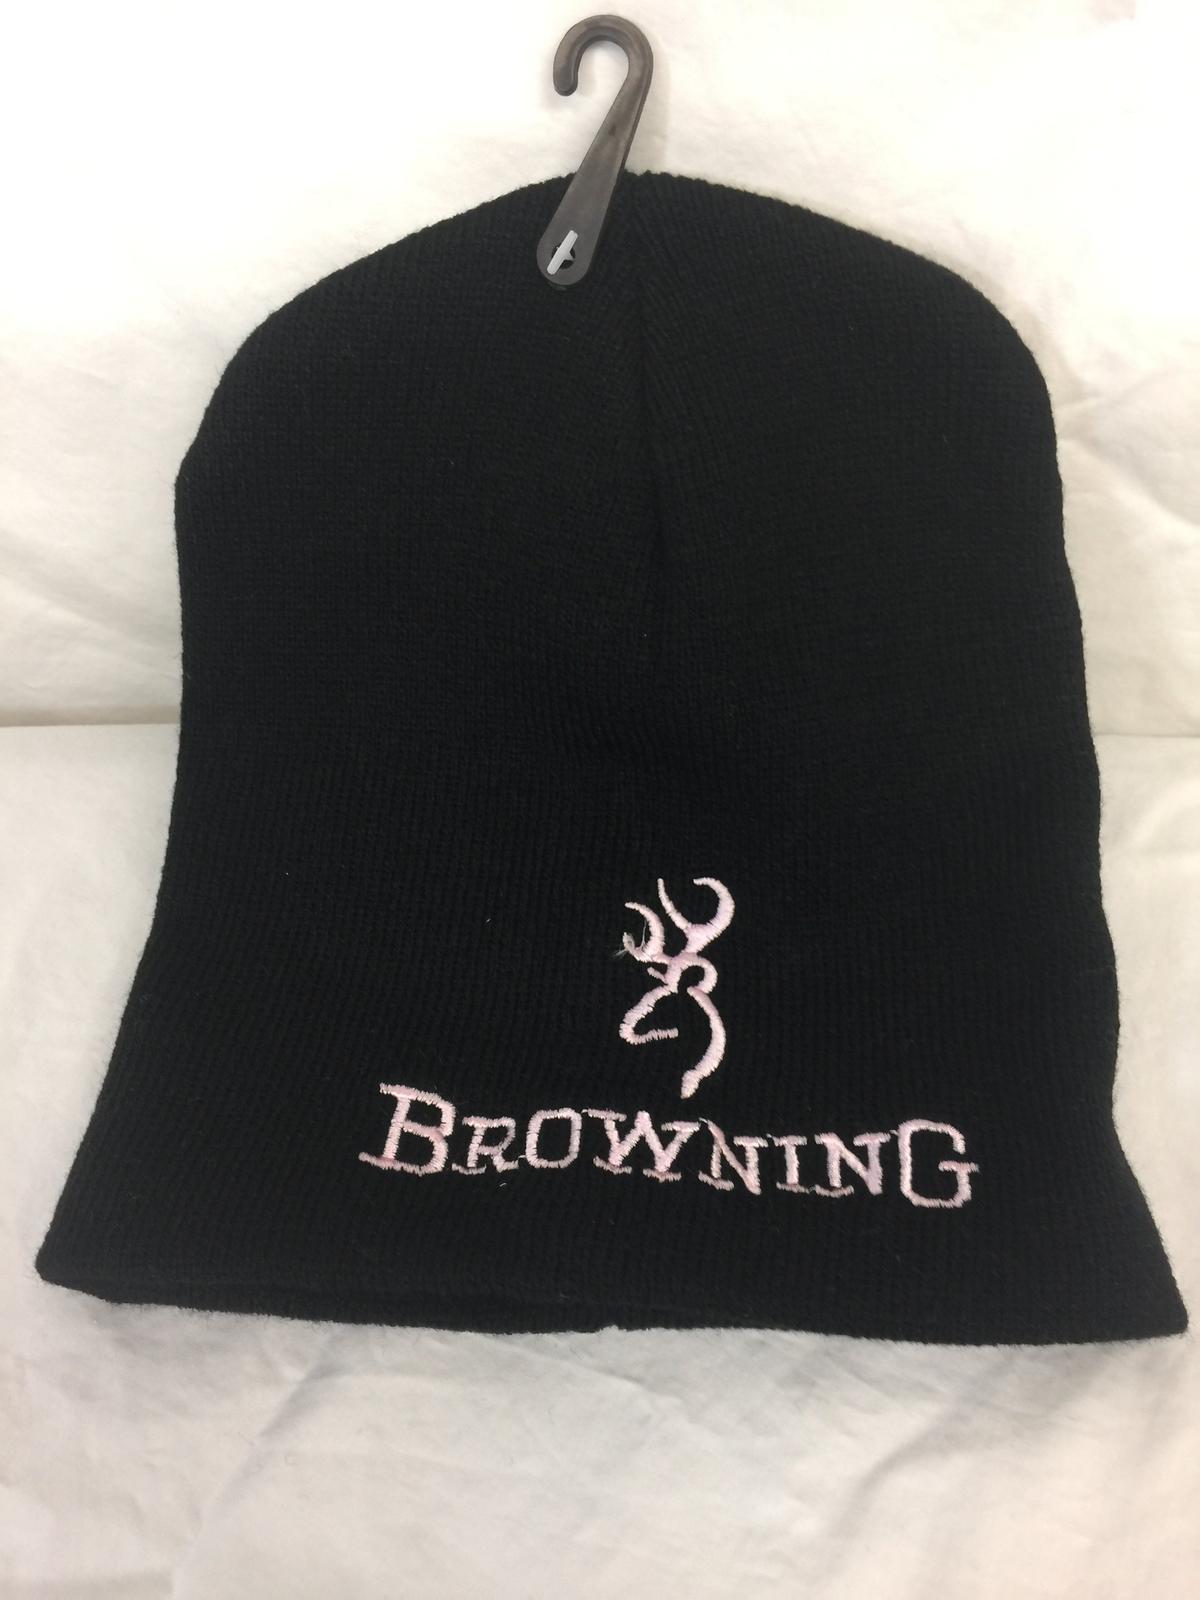 Browning Skull Cap (Pink)